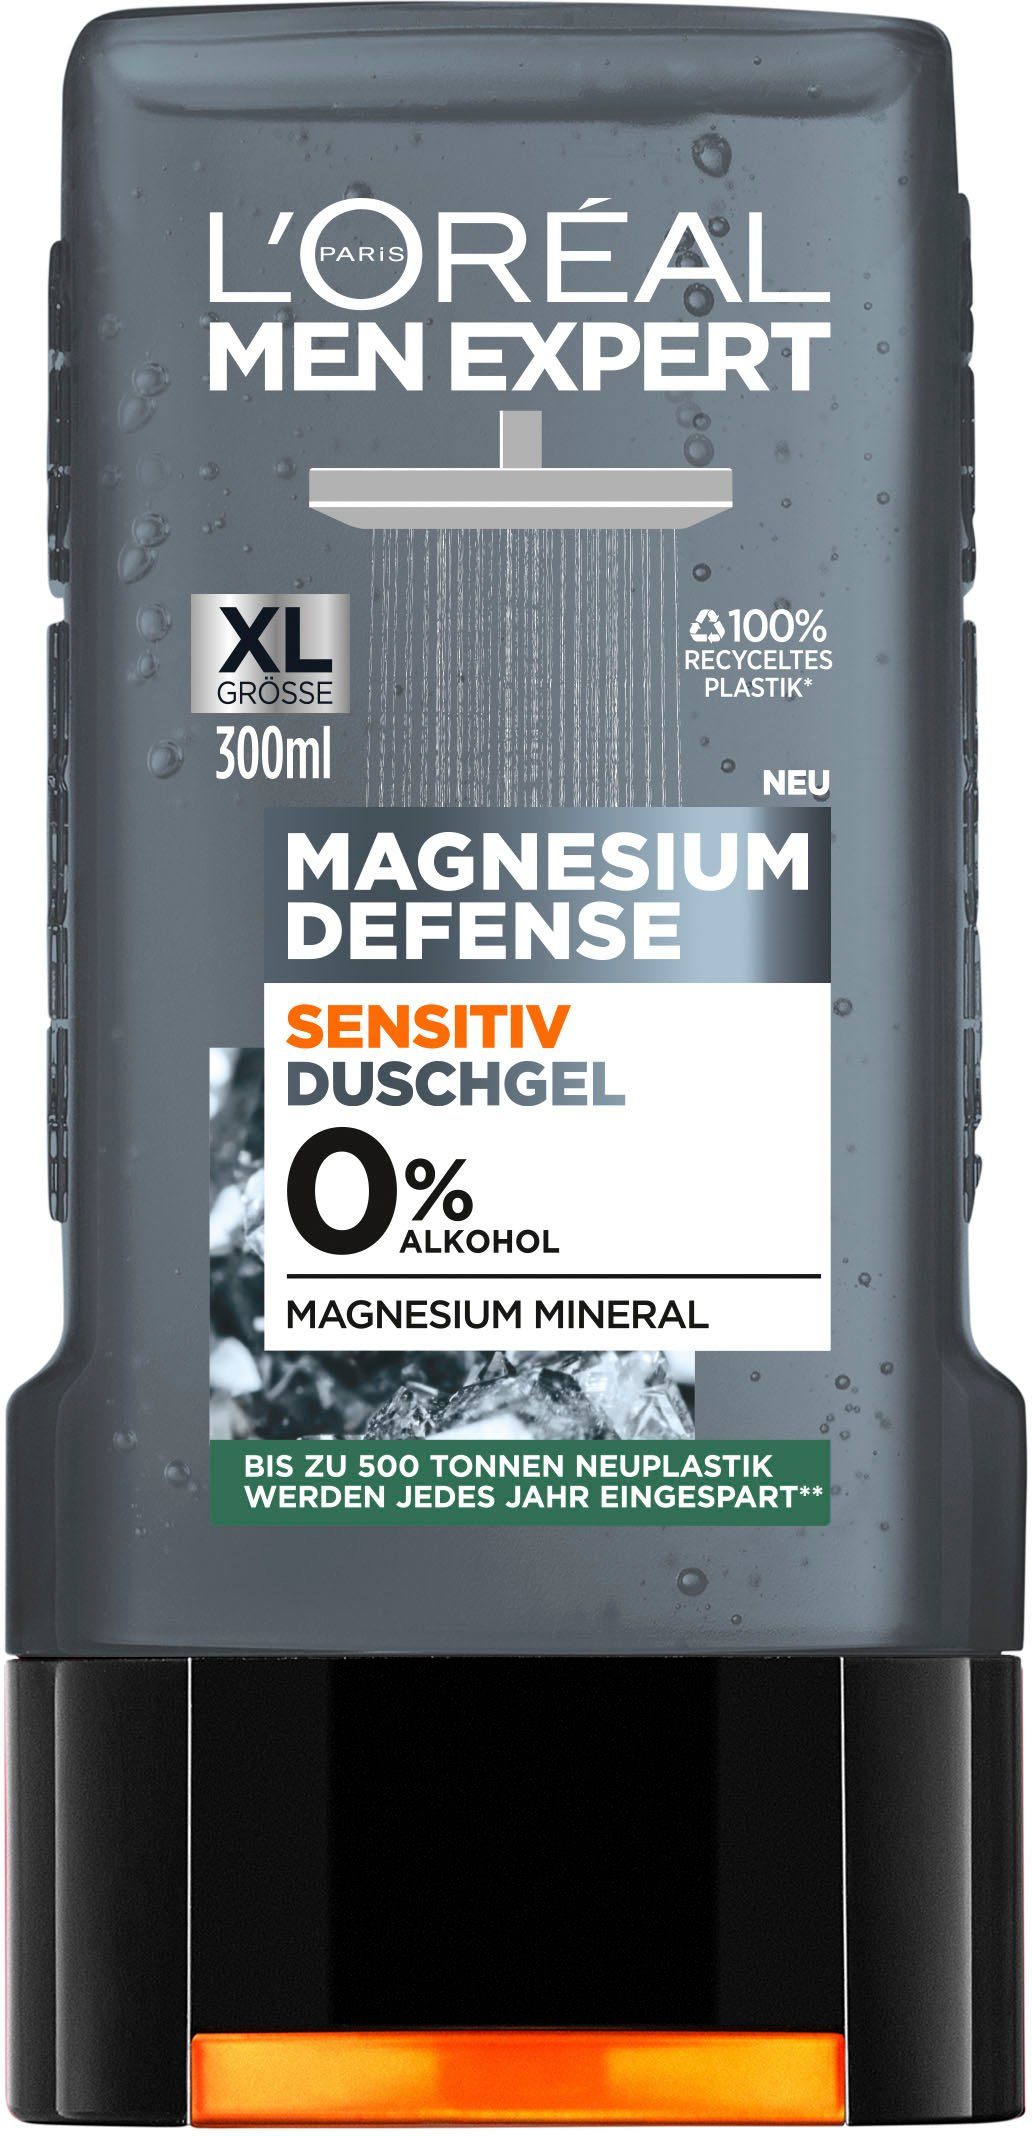 L'ORÉAL PARIS MEN EXPERT Duschgel Magnesium Defense Sensitiv